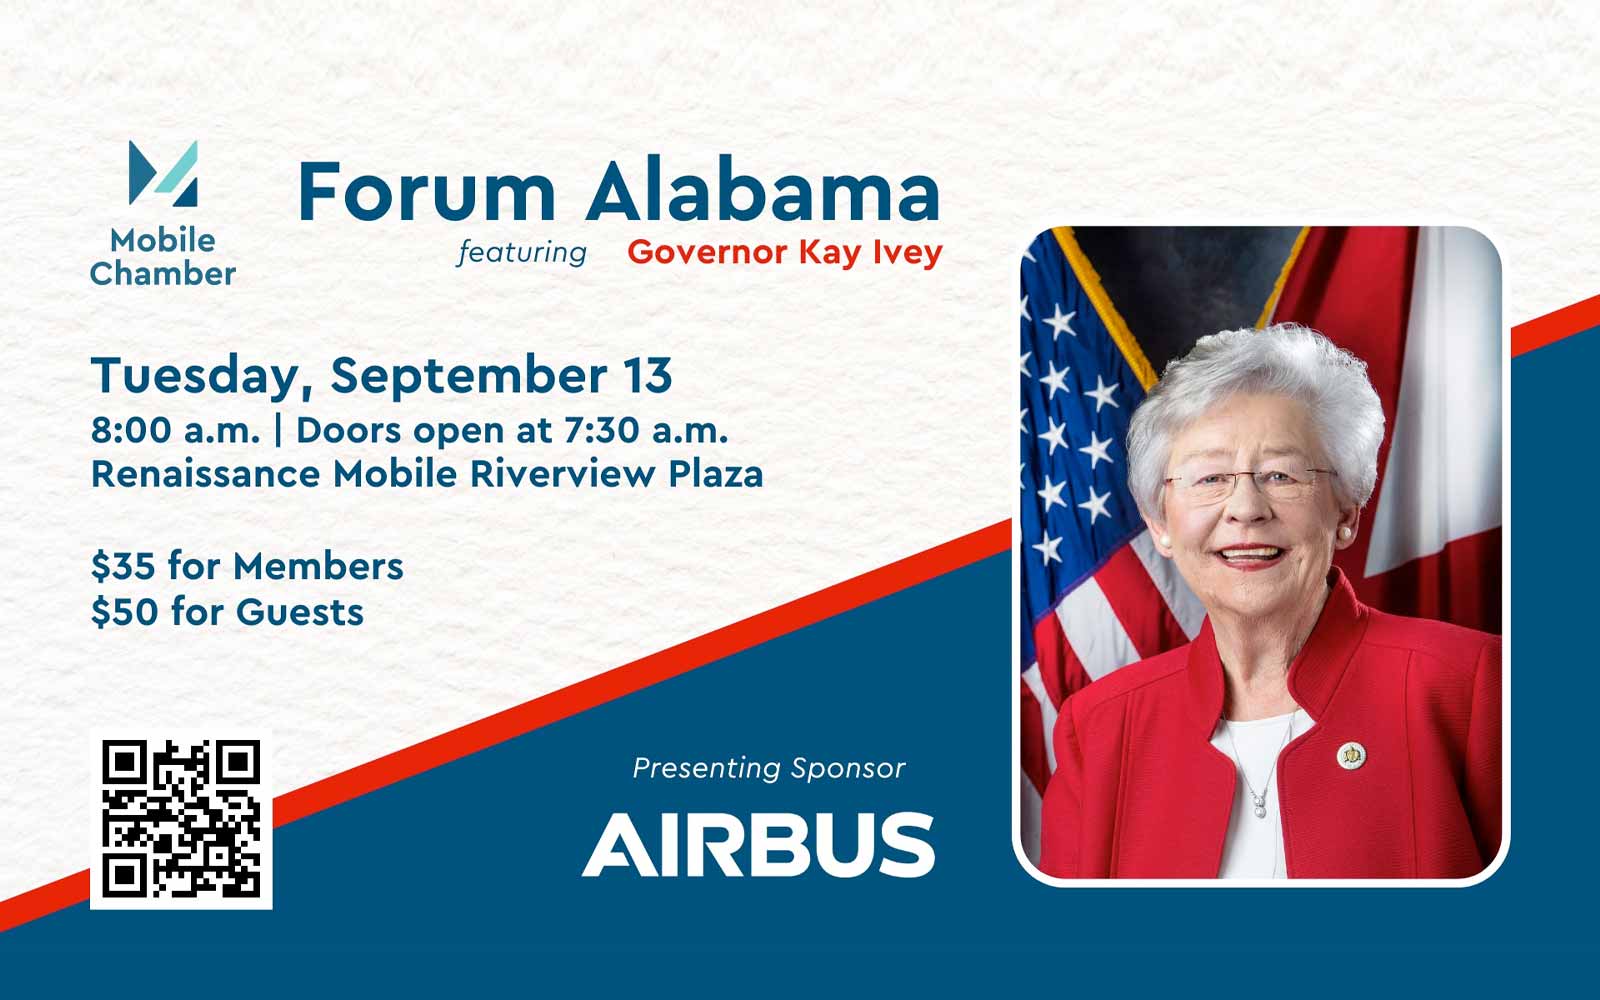 Gov. Kay Ivey To Speak At Forum Alabama